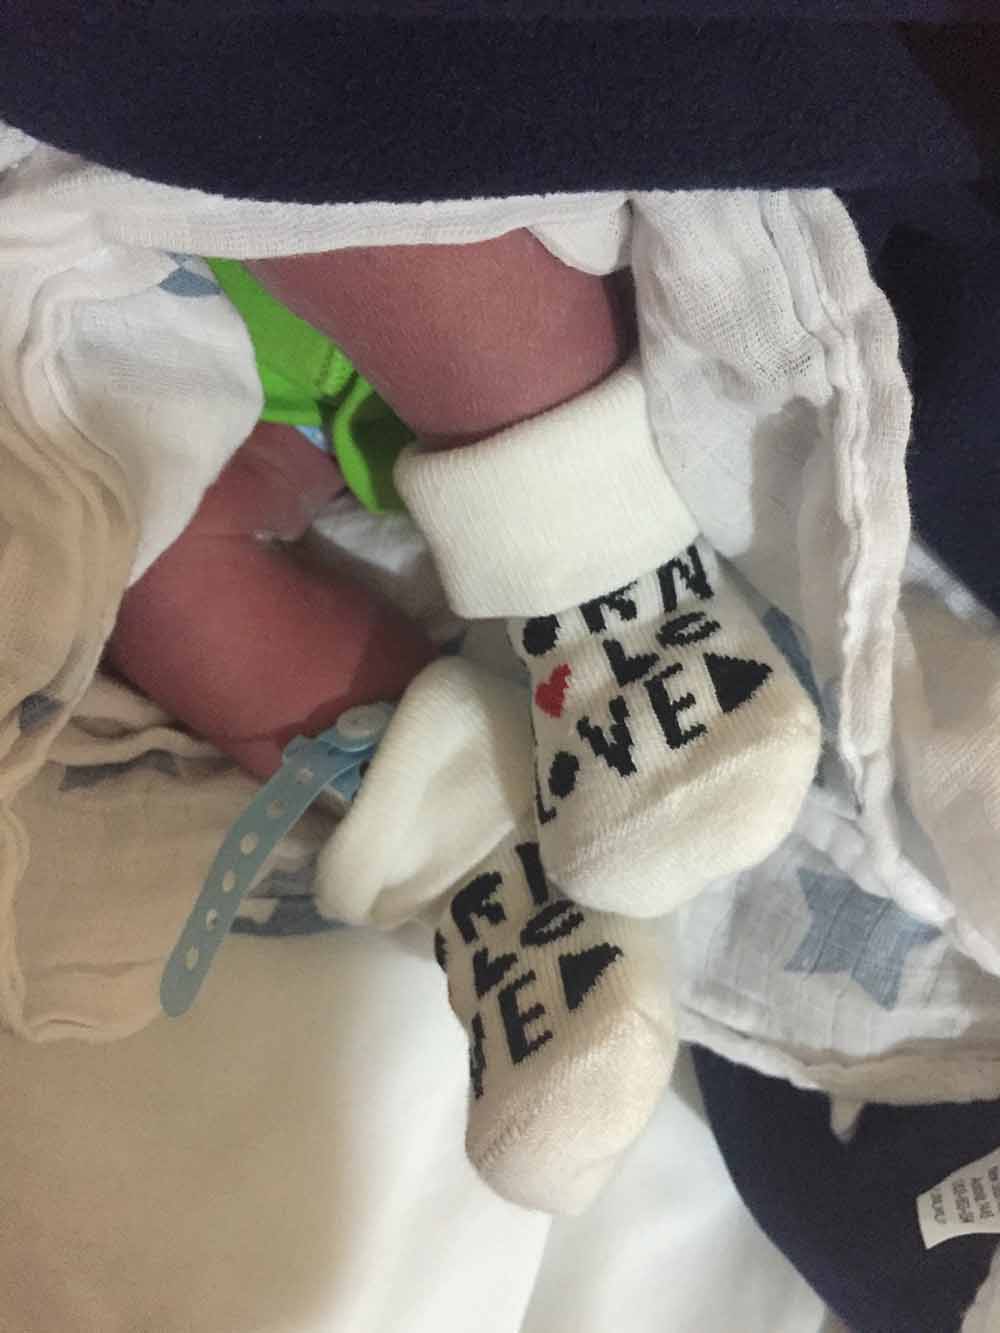 A baby's beautiful feet, with cute socks worn on them.